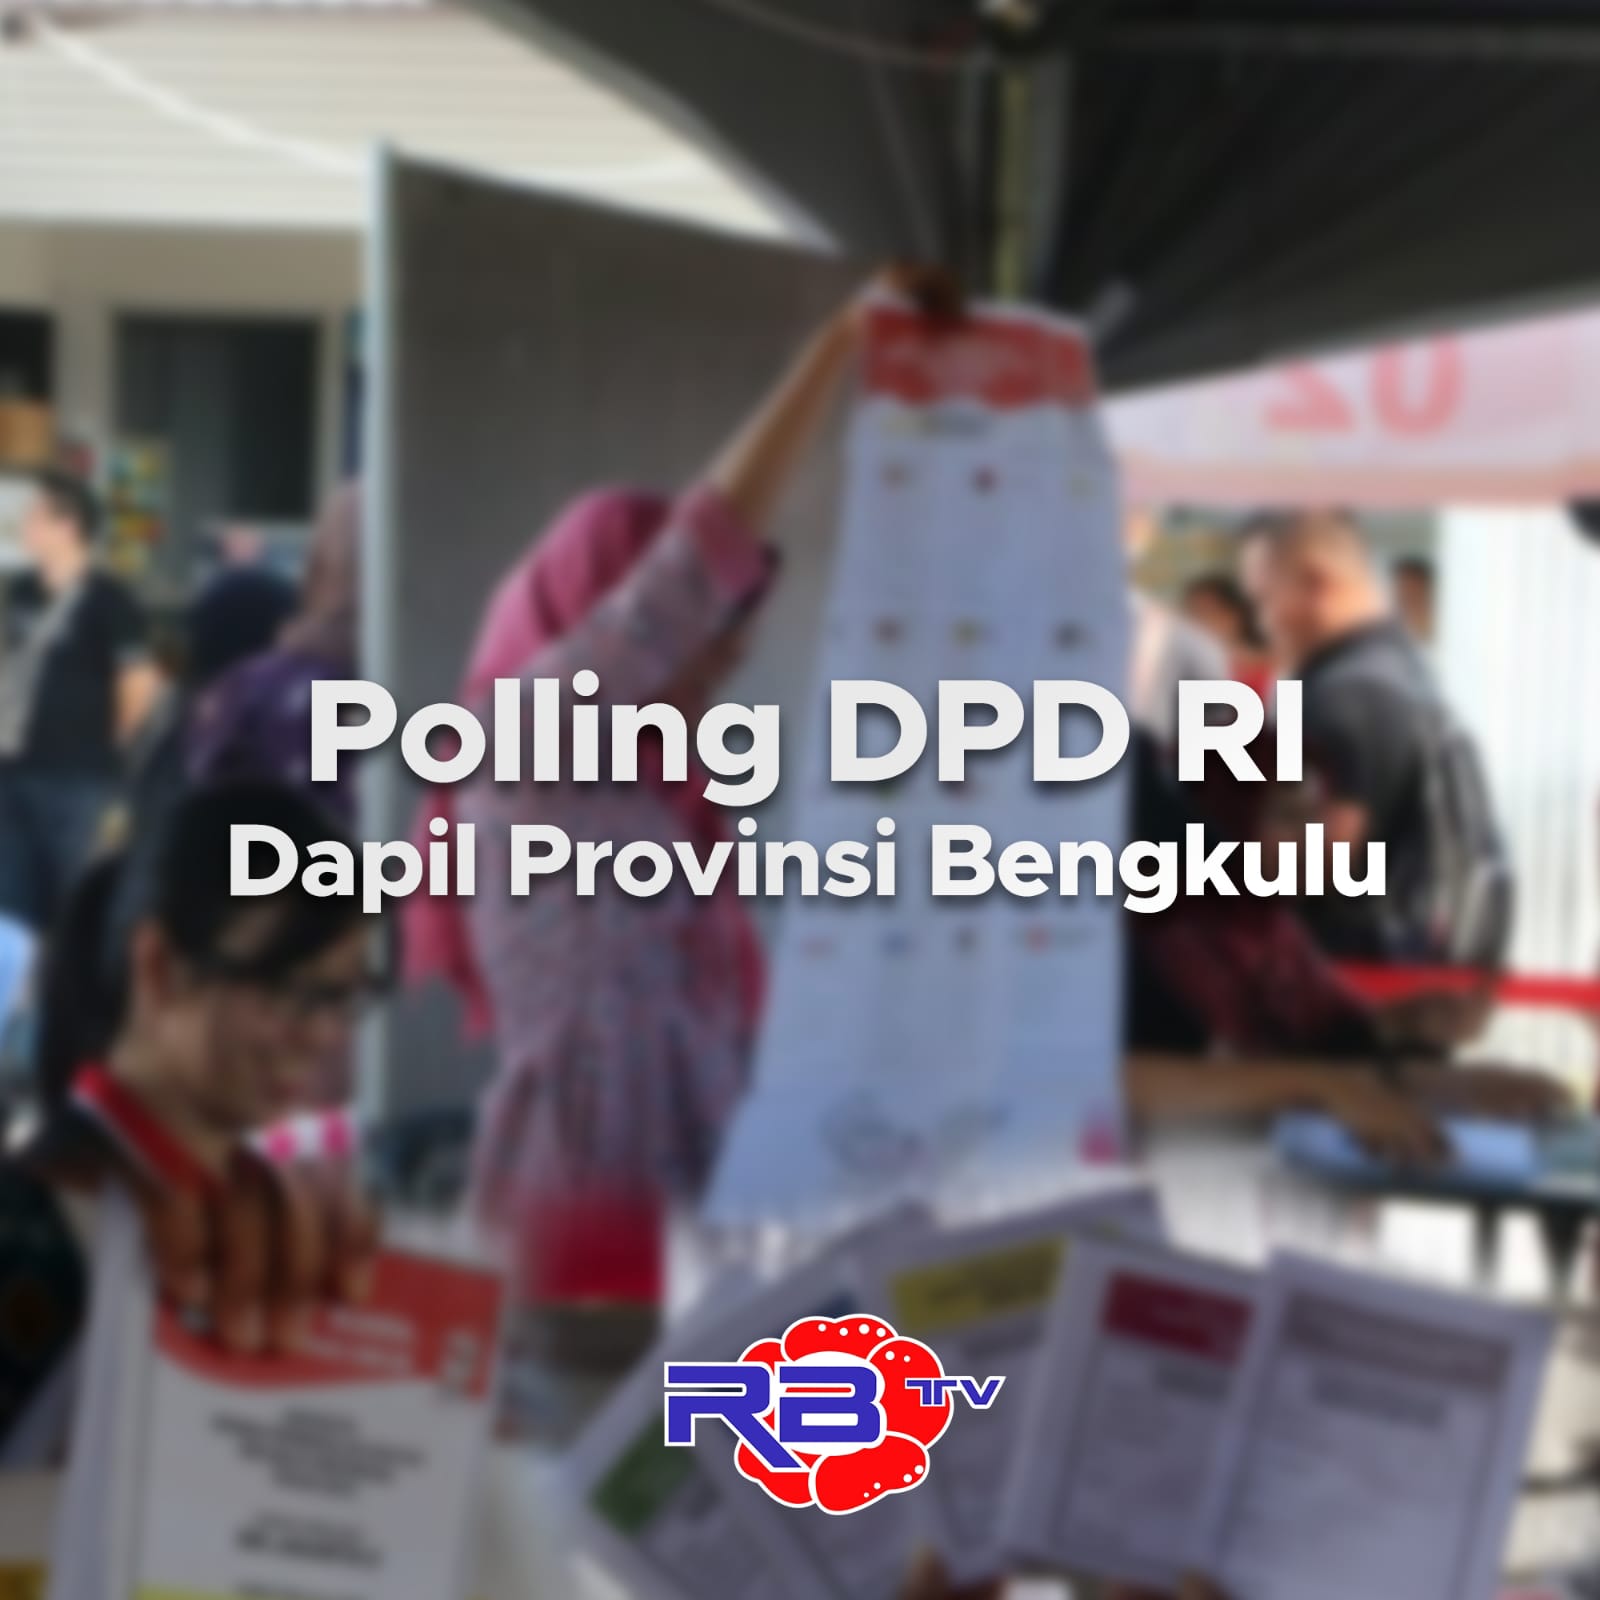 Polling DPD RI Dapil Provinsi Bengkulu, Silakan Pilih Kandidat Anda dalam Berita Ini